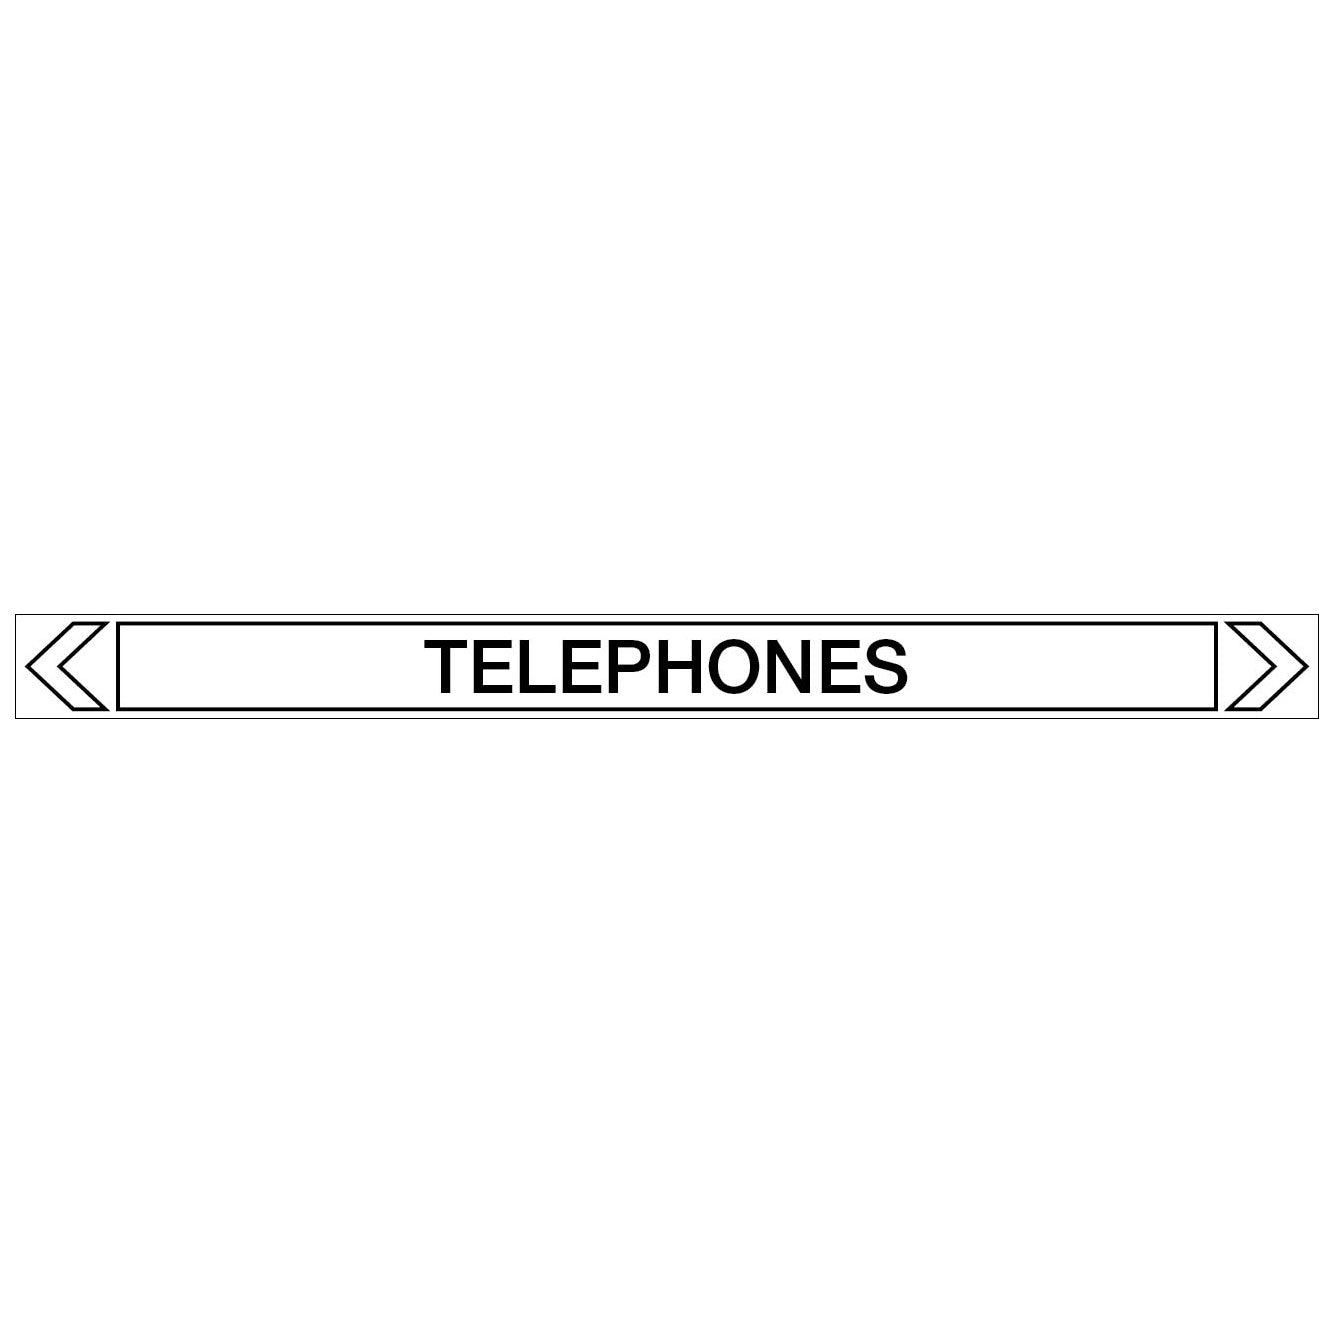 Communications - Telephones - Pipe Marker Sticker